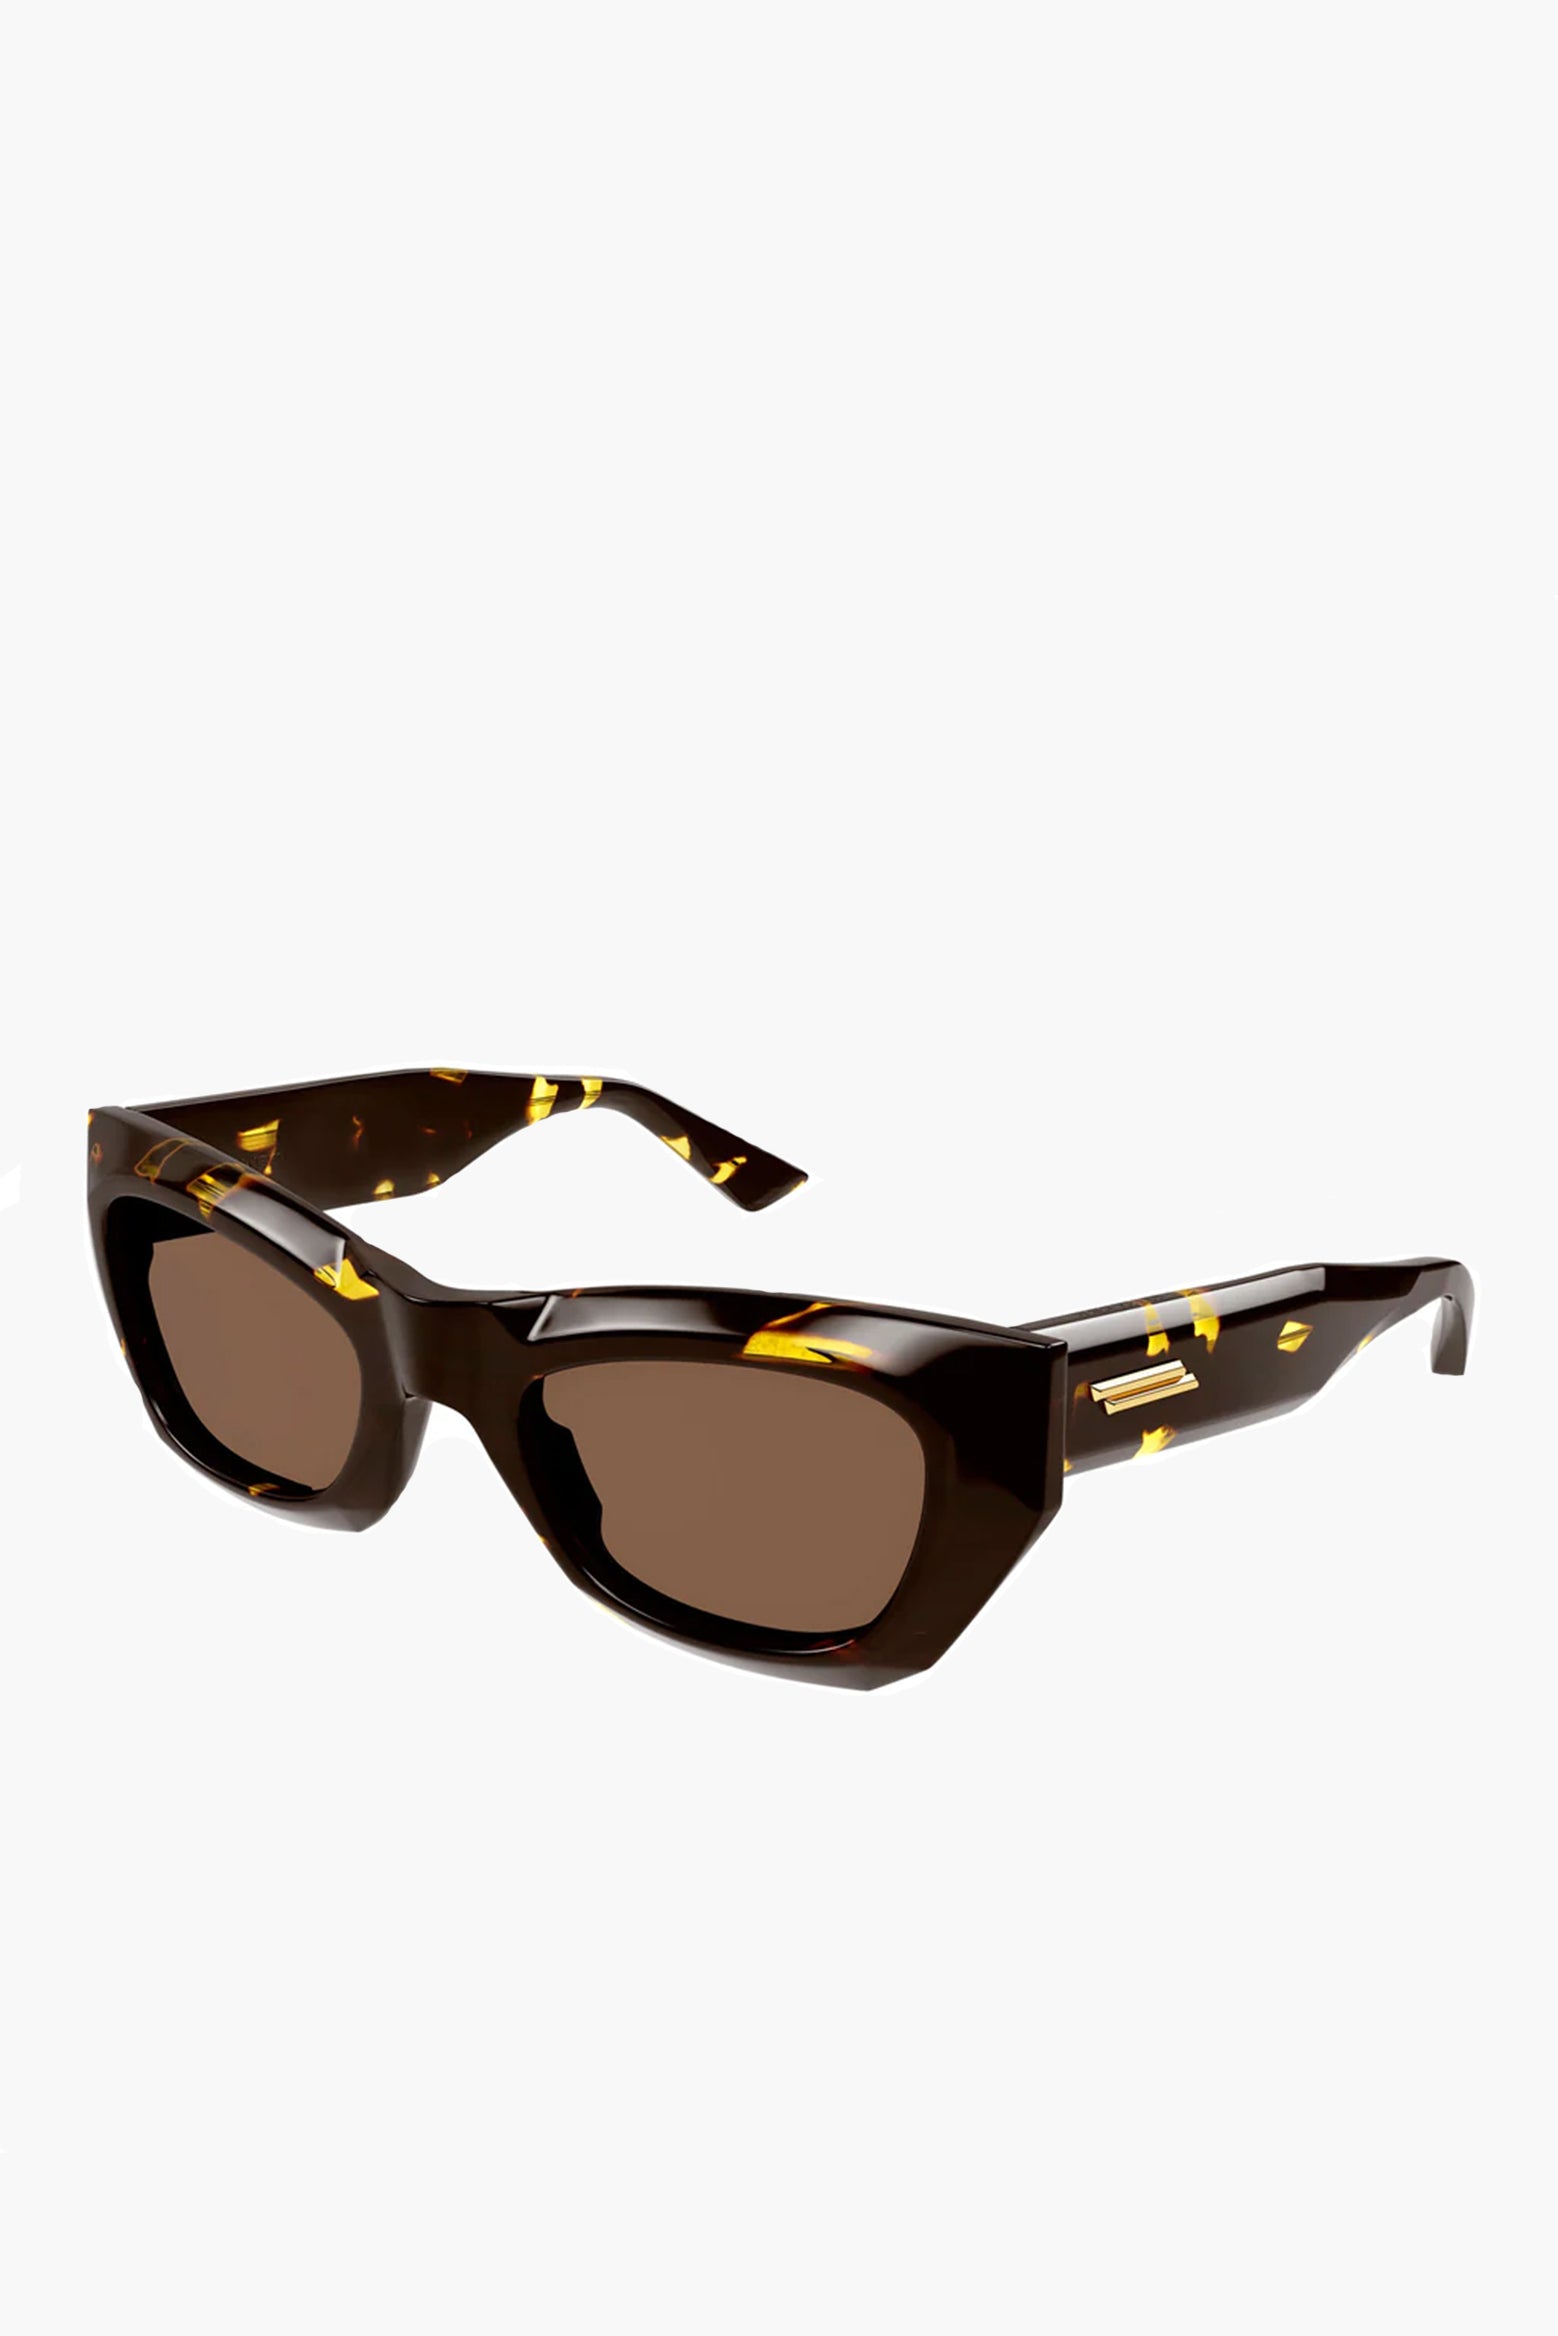 Bottega Veneta Rectangle Frame Sunglasses in Havana available at The New Trend Australia.